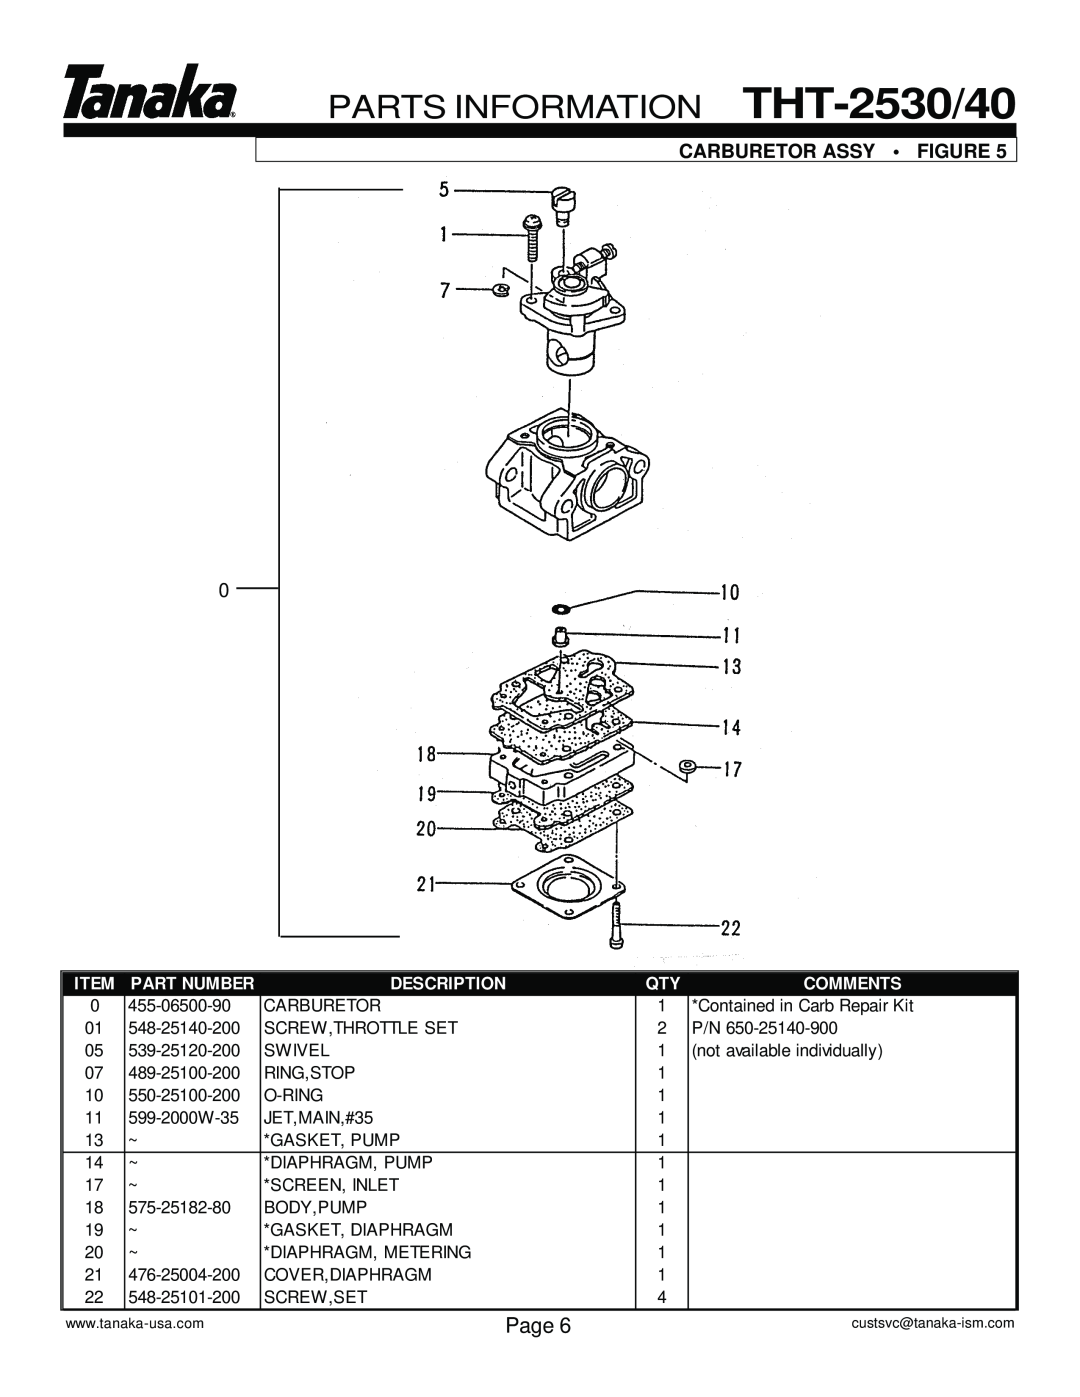 Tanaka THT-2530/2540 manual PARTS INFORMATION THT-2530/40, Carburetor Assy Figure, Part Number, Description, Comments 